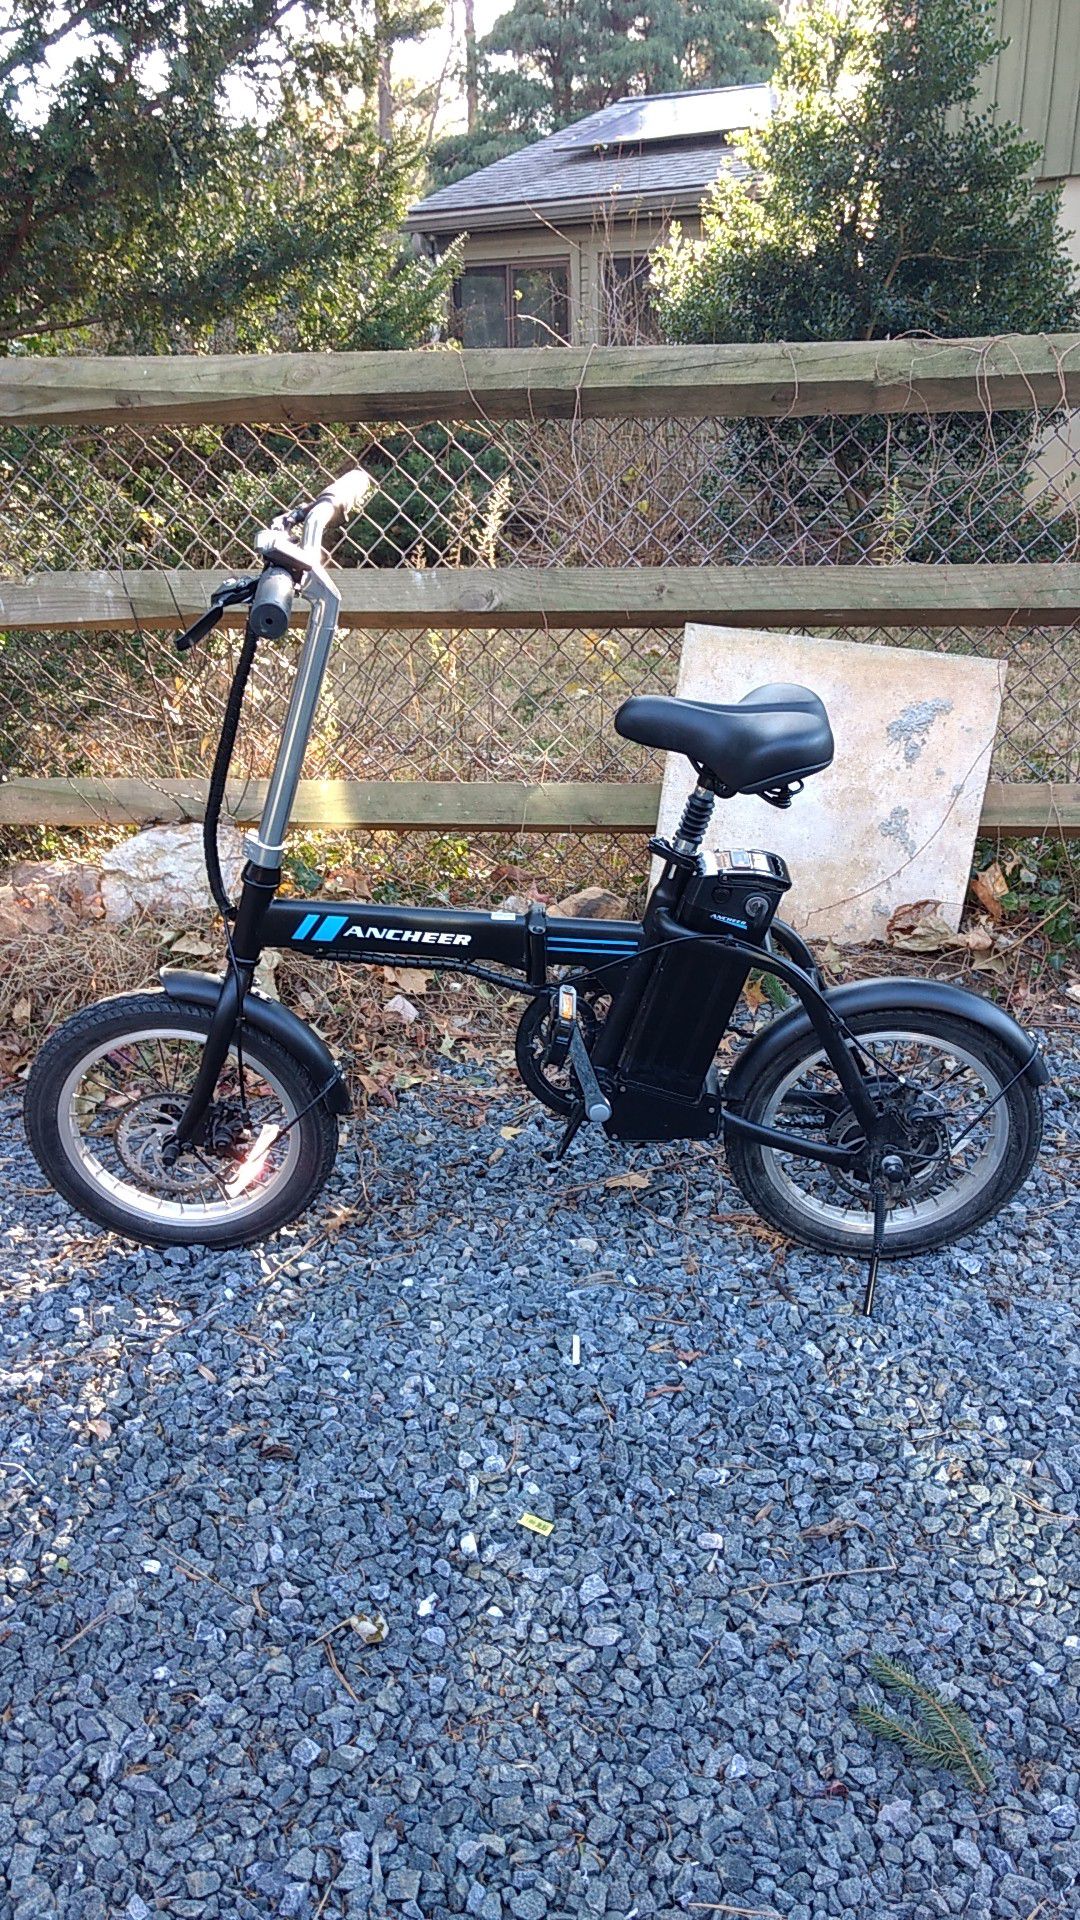 Ancheer 16 inch electric bike